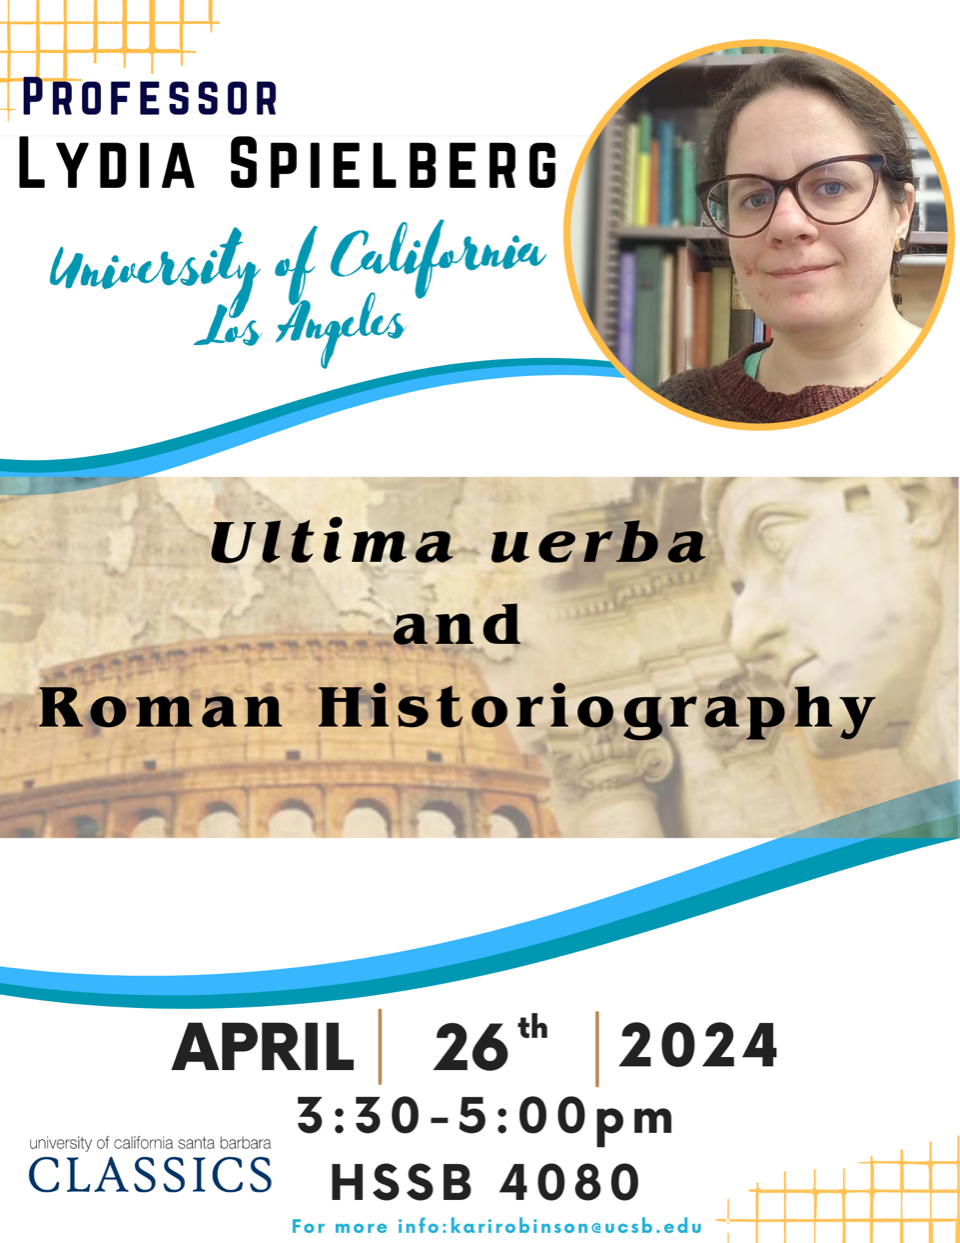 Lydia Spielberg (UCLA), “Ultima uerba and Roman Historiography” @ HSSB 4080